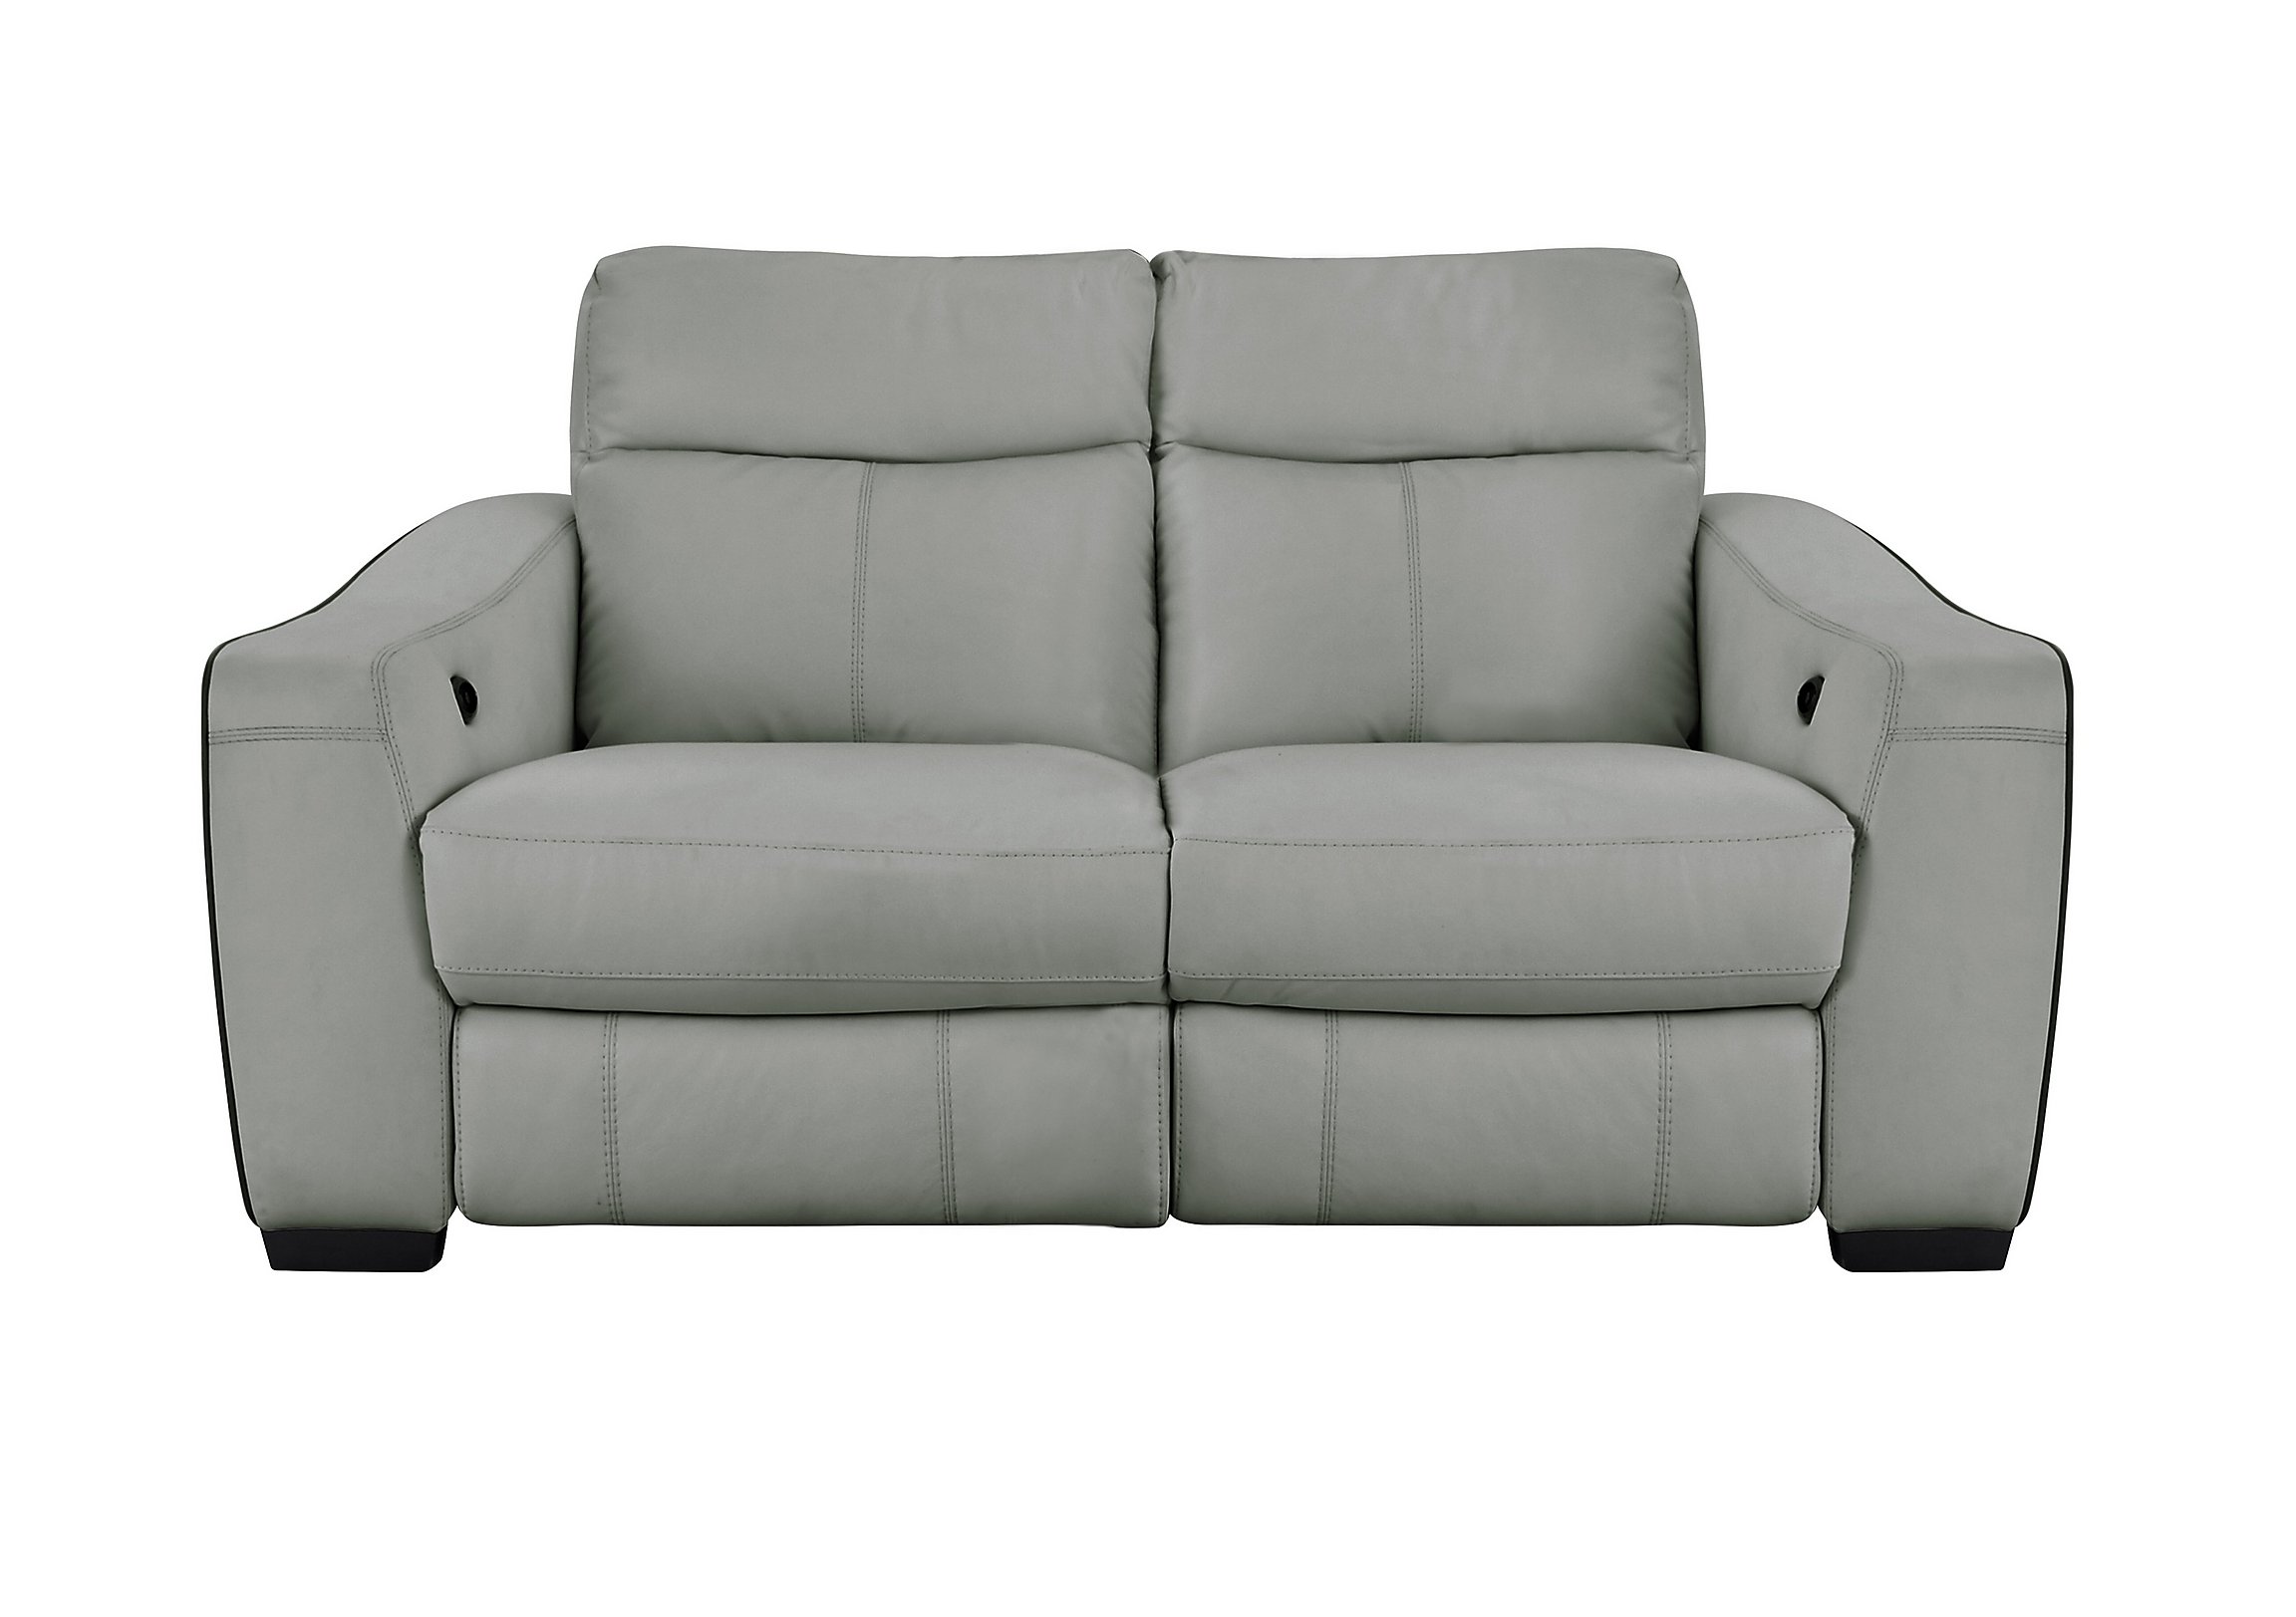 Cressida 2 Seater Leather Recliner Sofa Furniture Village